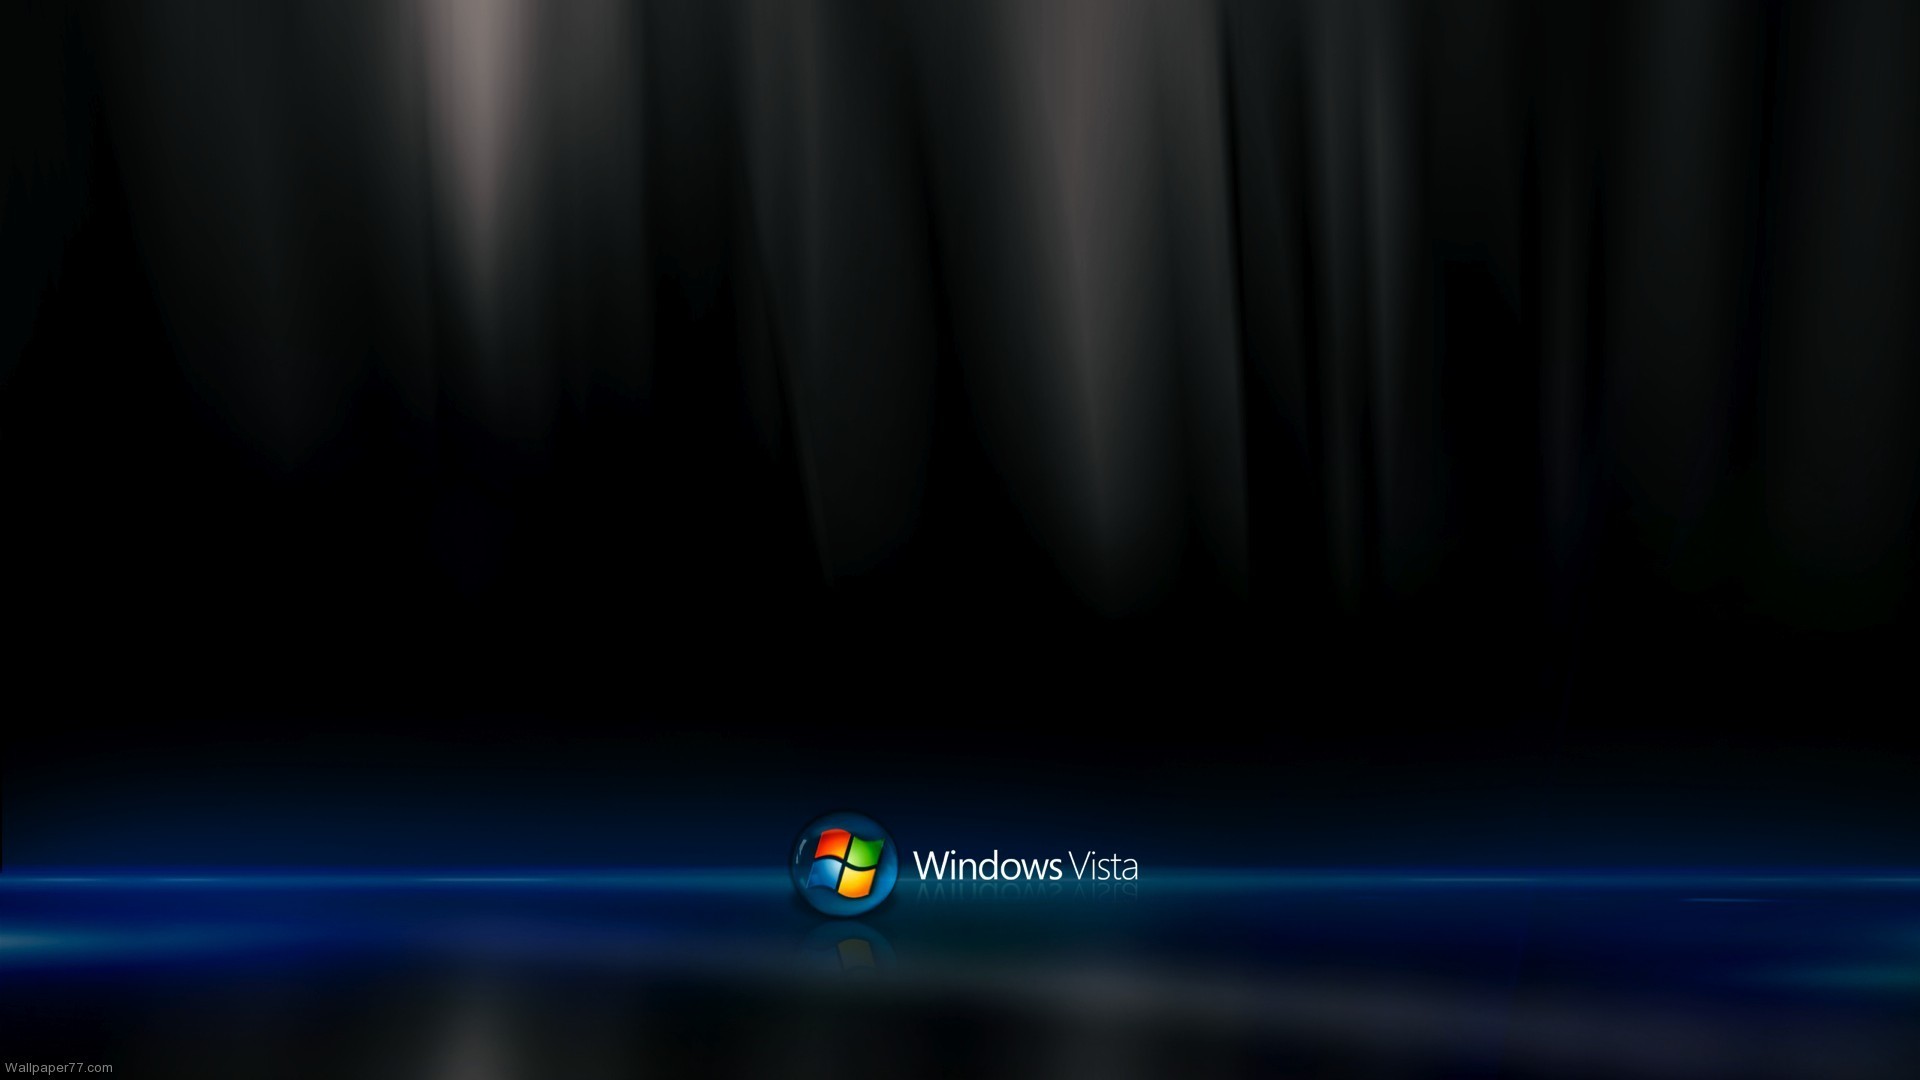 Windows Vista Wallpaper 23864 Source A Windows Vista Wallpaper Hd 1920x1080 Wallpaper Teahub Io